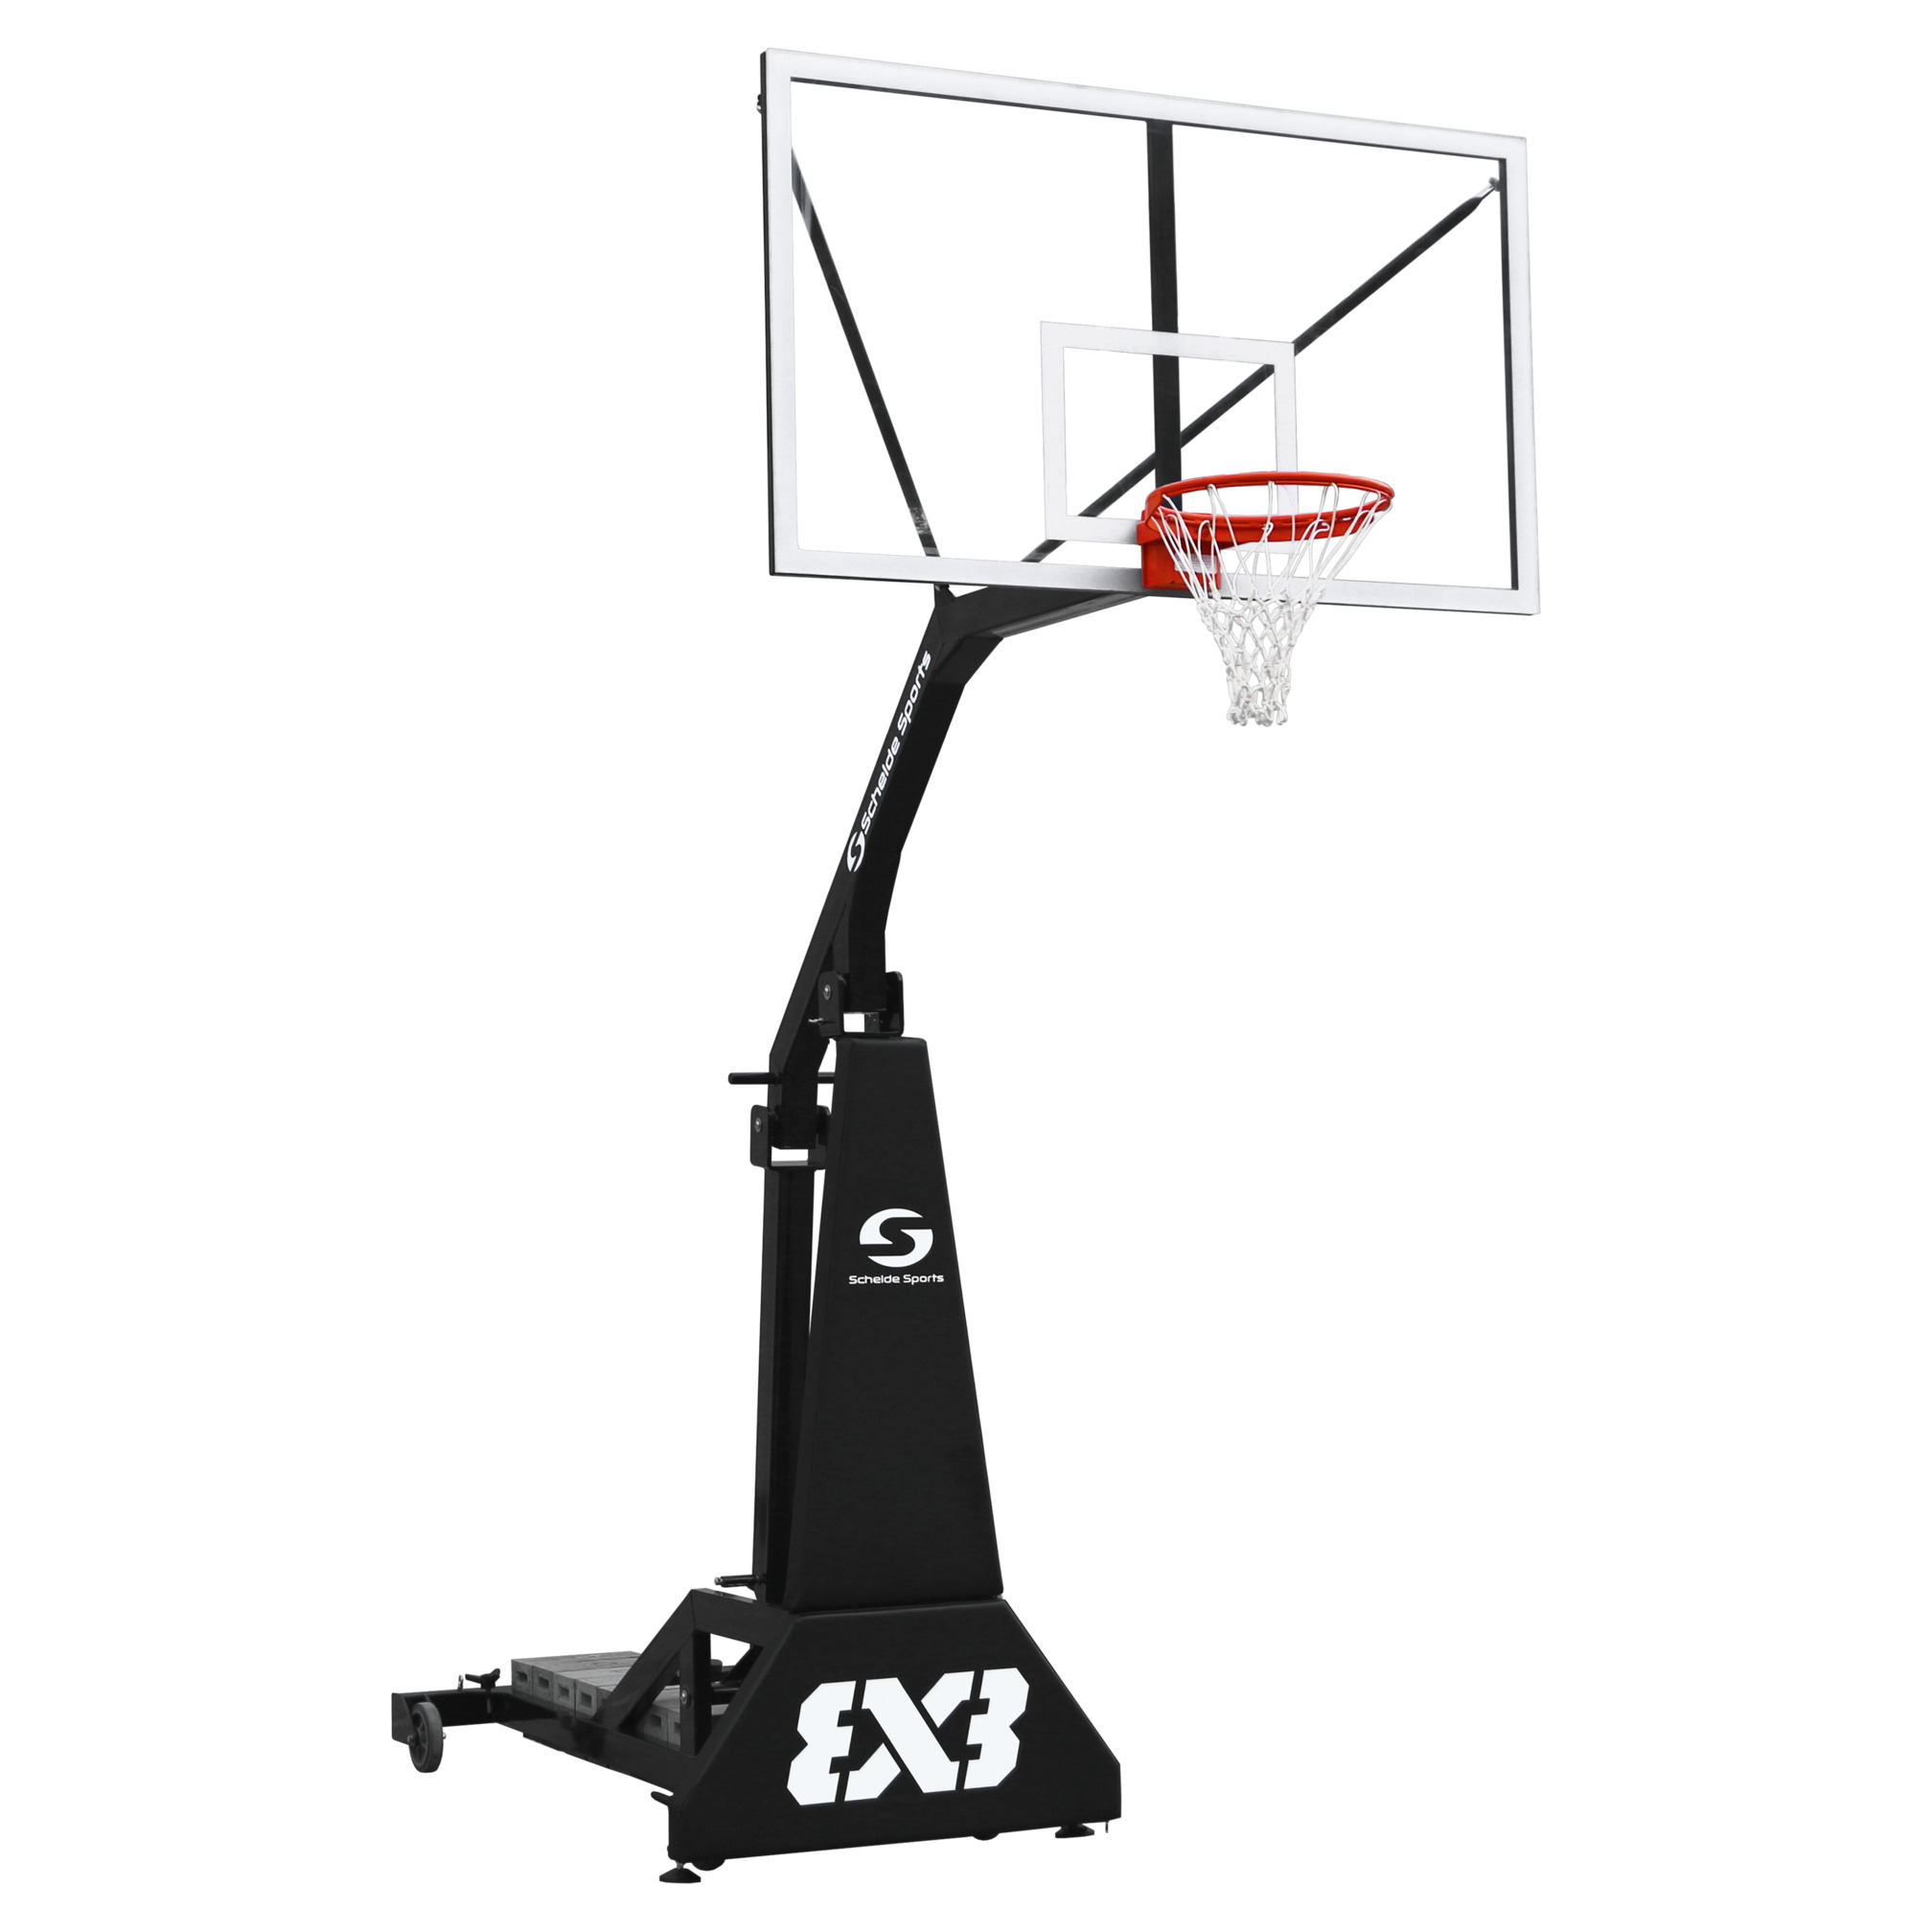 Basketbaltoren 3x3 Street Slammer